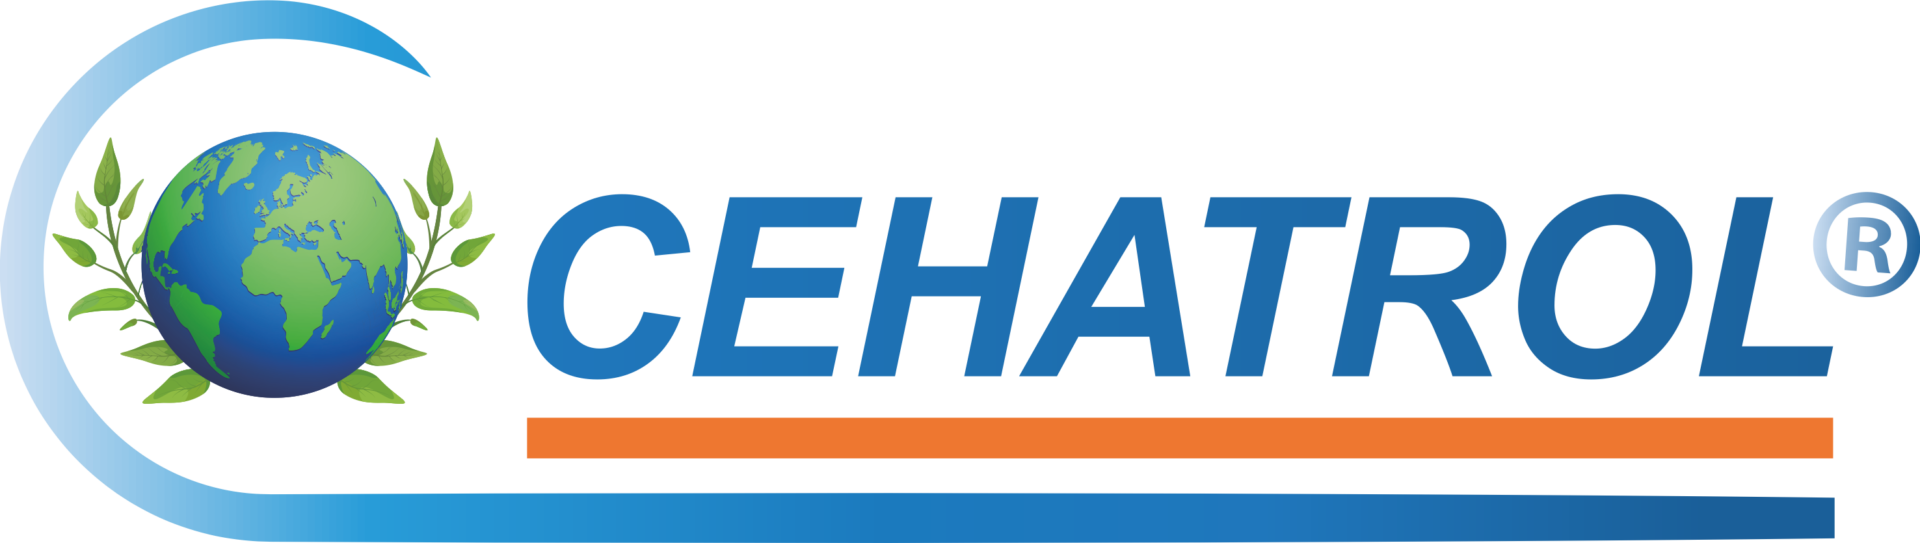 CEHATROL Logo.png